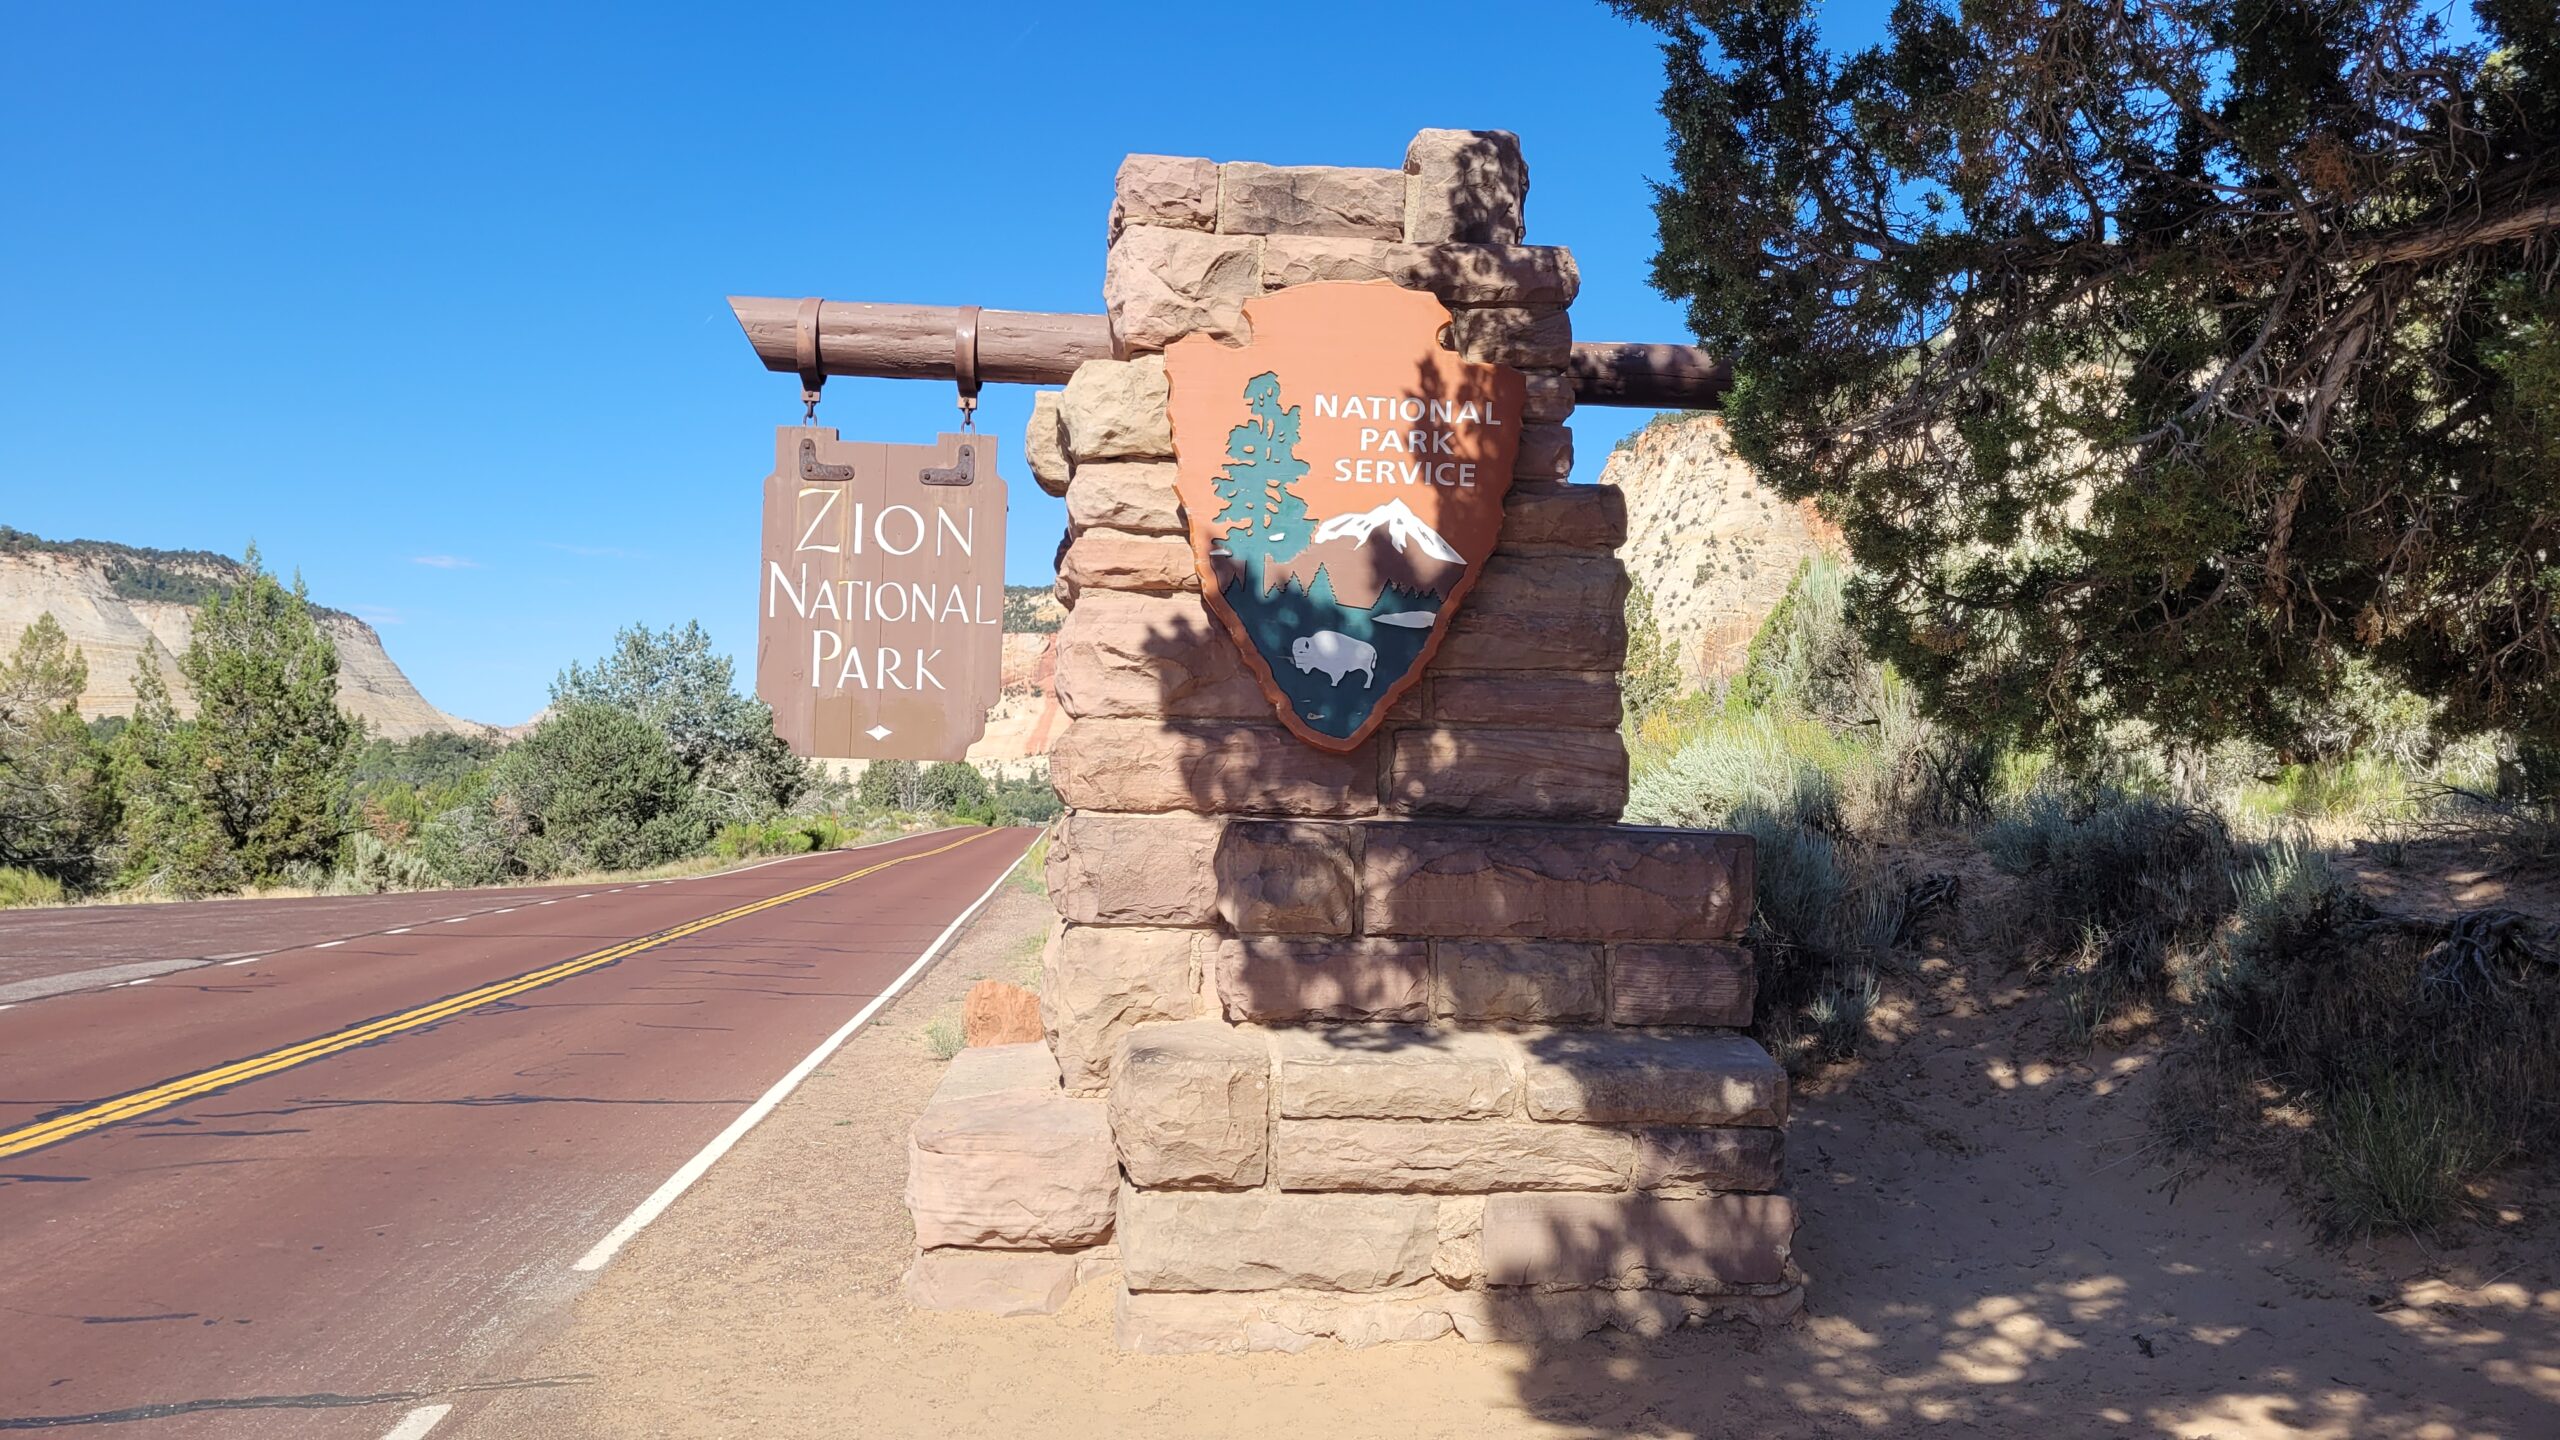 7 Day Zion National Park Exploration